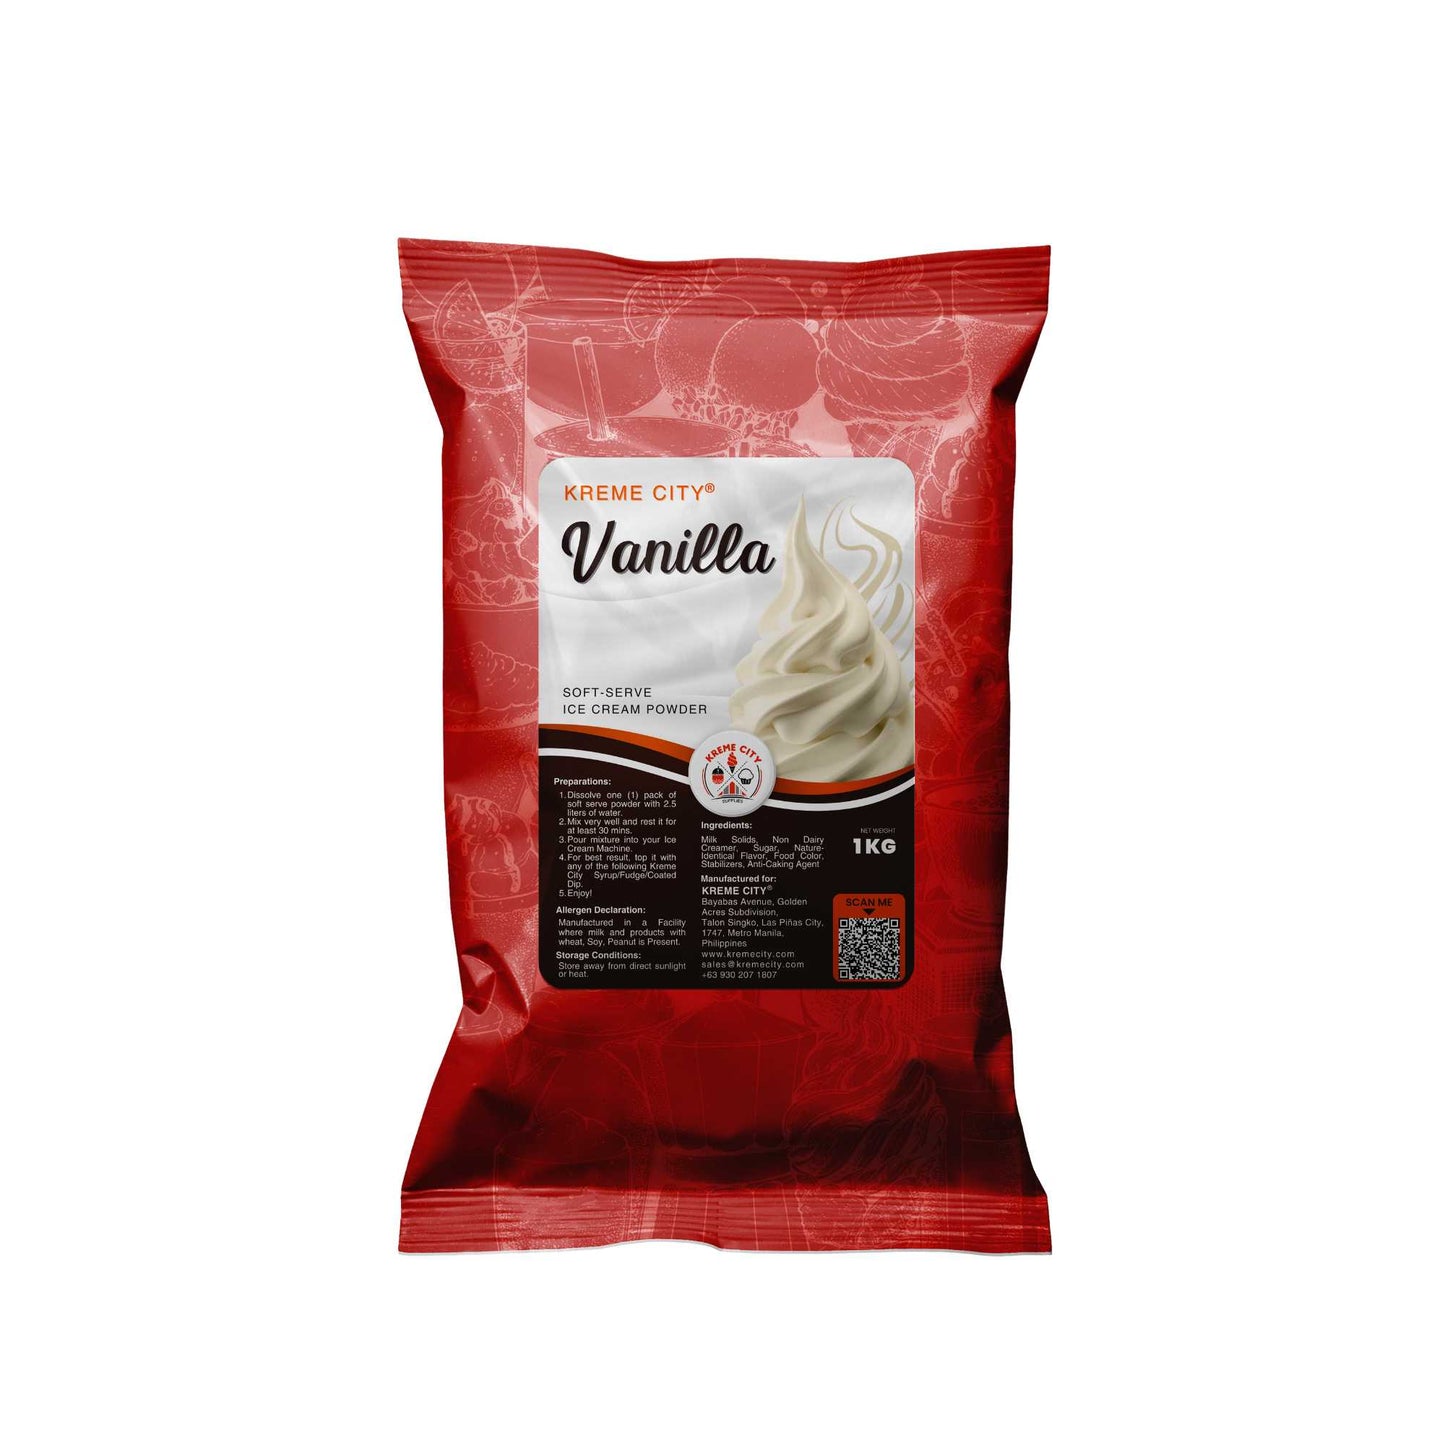 Kreme City Vanilla Soft Serve Ice Cream Powder Premix 1kg